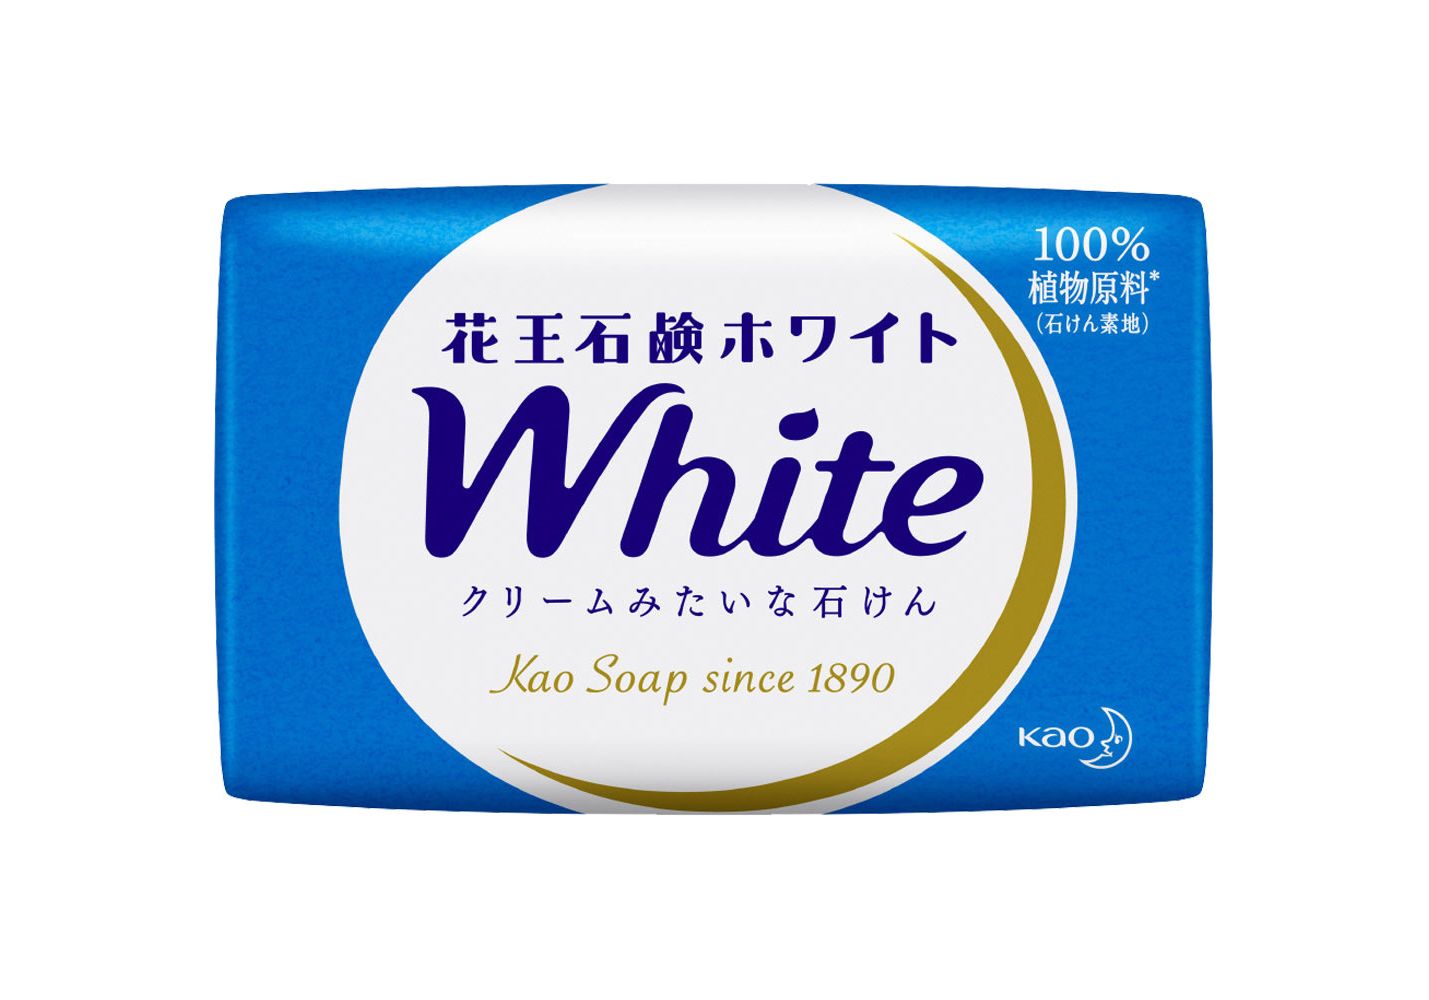 Увлажняющее крем-мыло для тела MegRhythm KAO White с ароматом белых цветов, 85г х 6шт. мыльная основа brilliant sls free white вес 10 кг